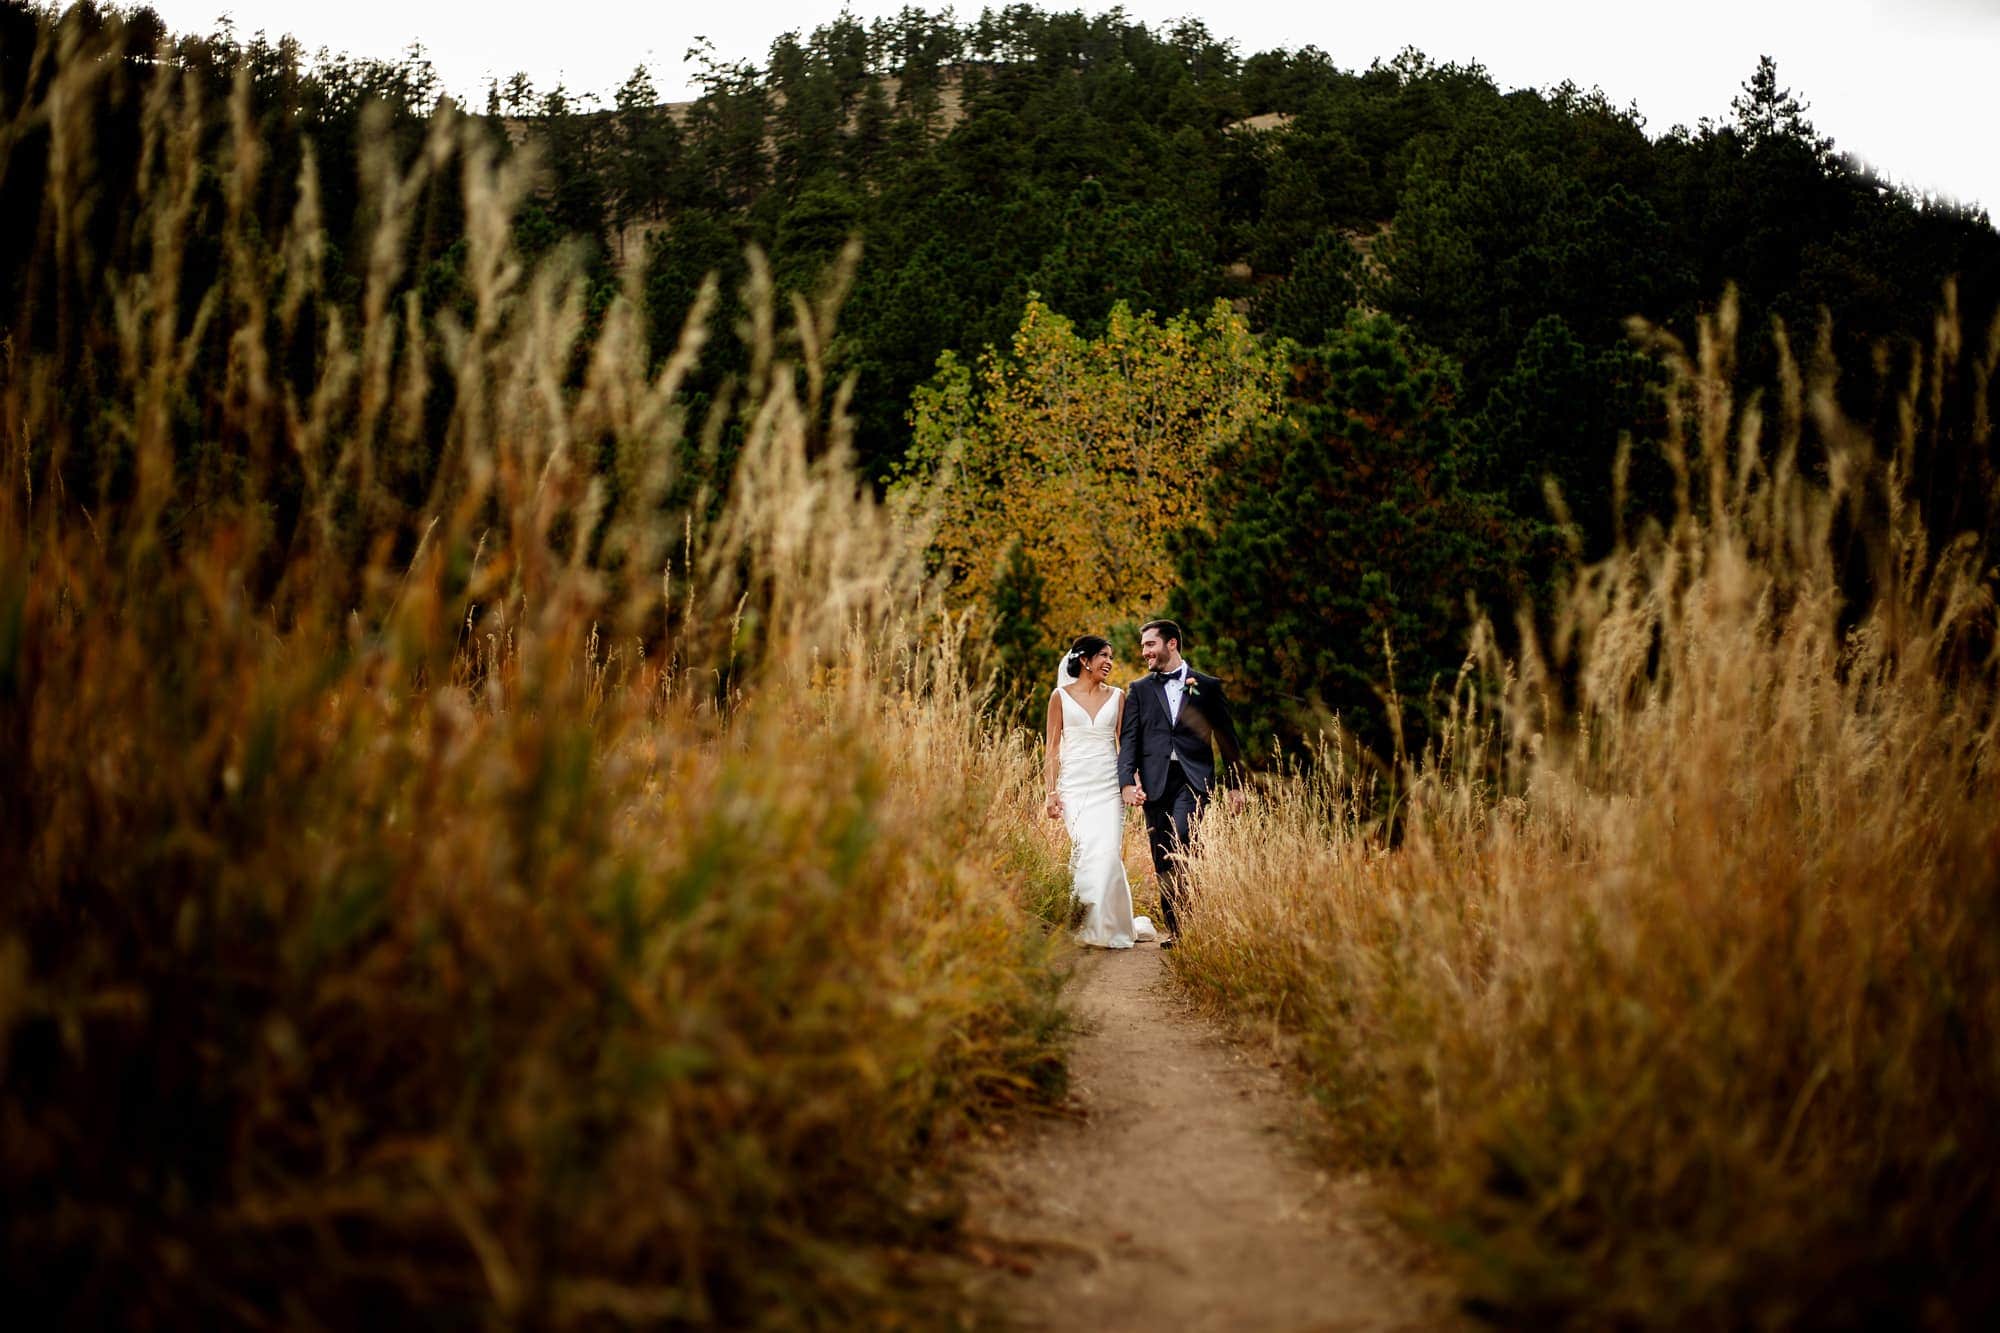 Megan walks with Bryan in the long grass at Centennial Park Trailhead in Boulder following their fall wedding